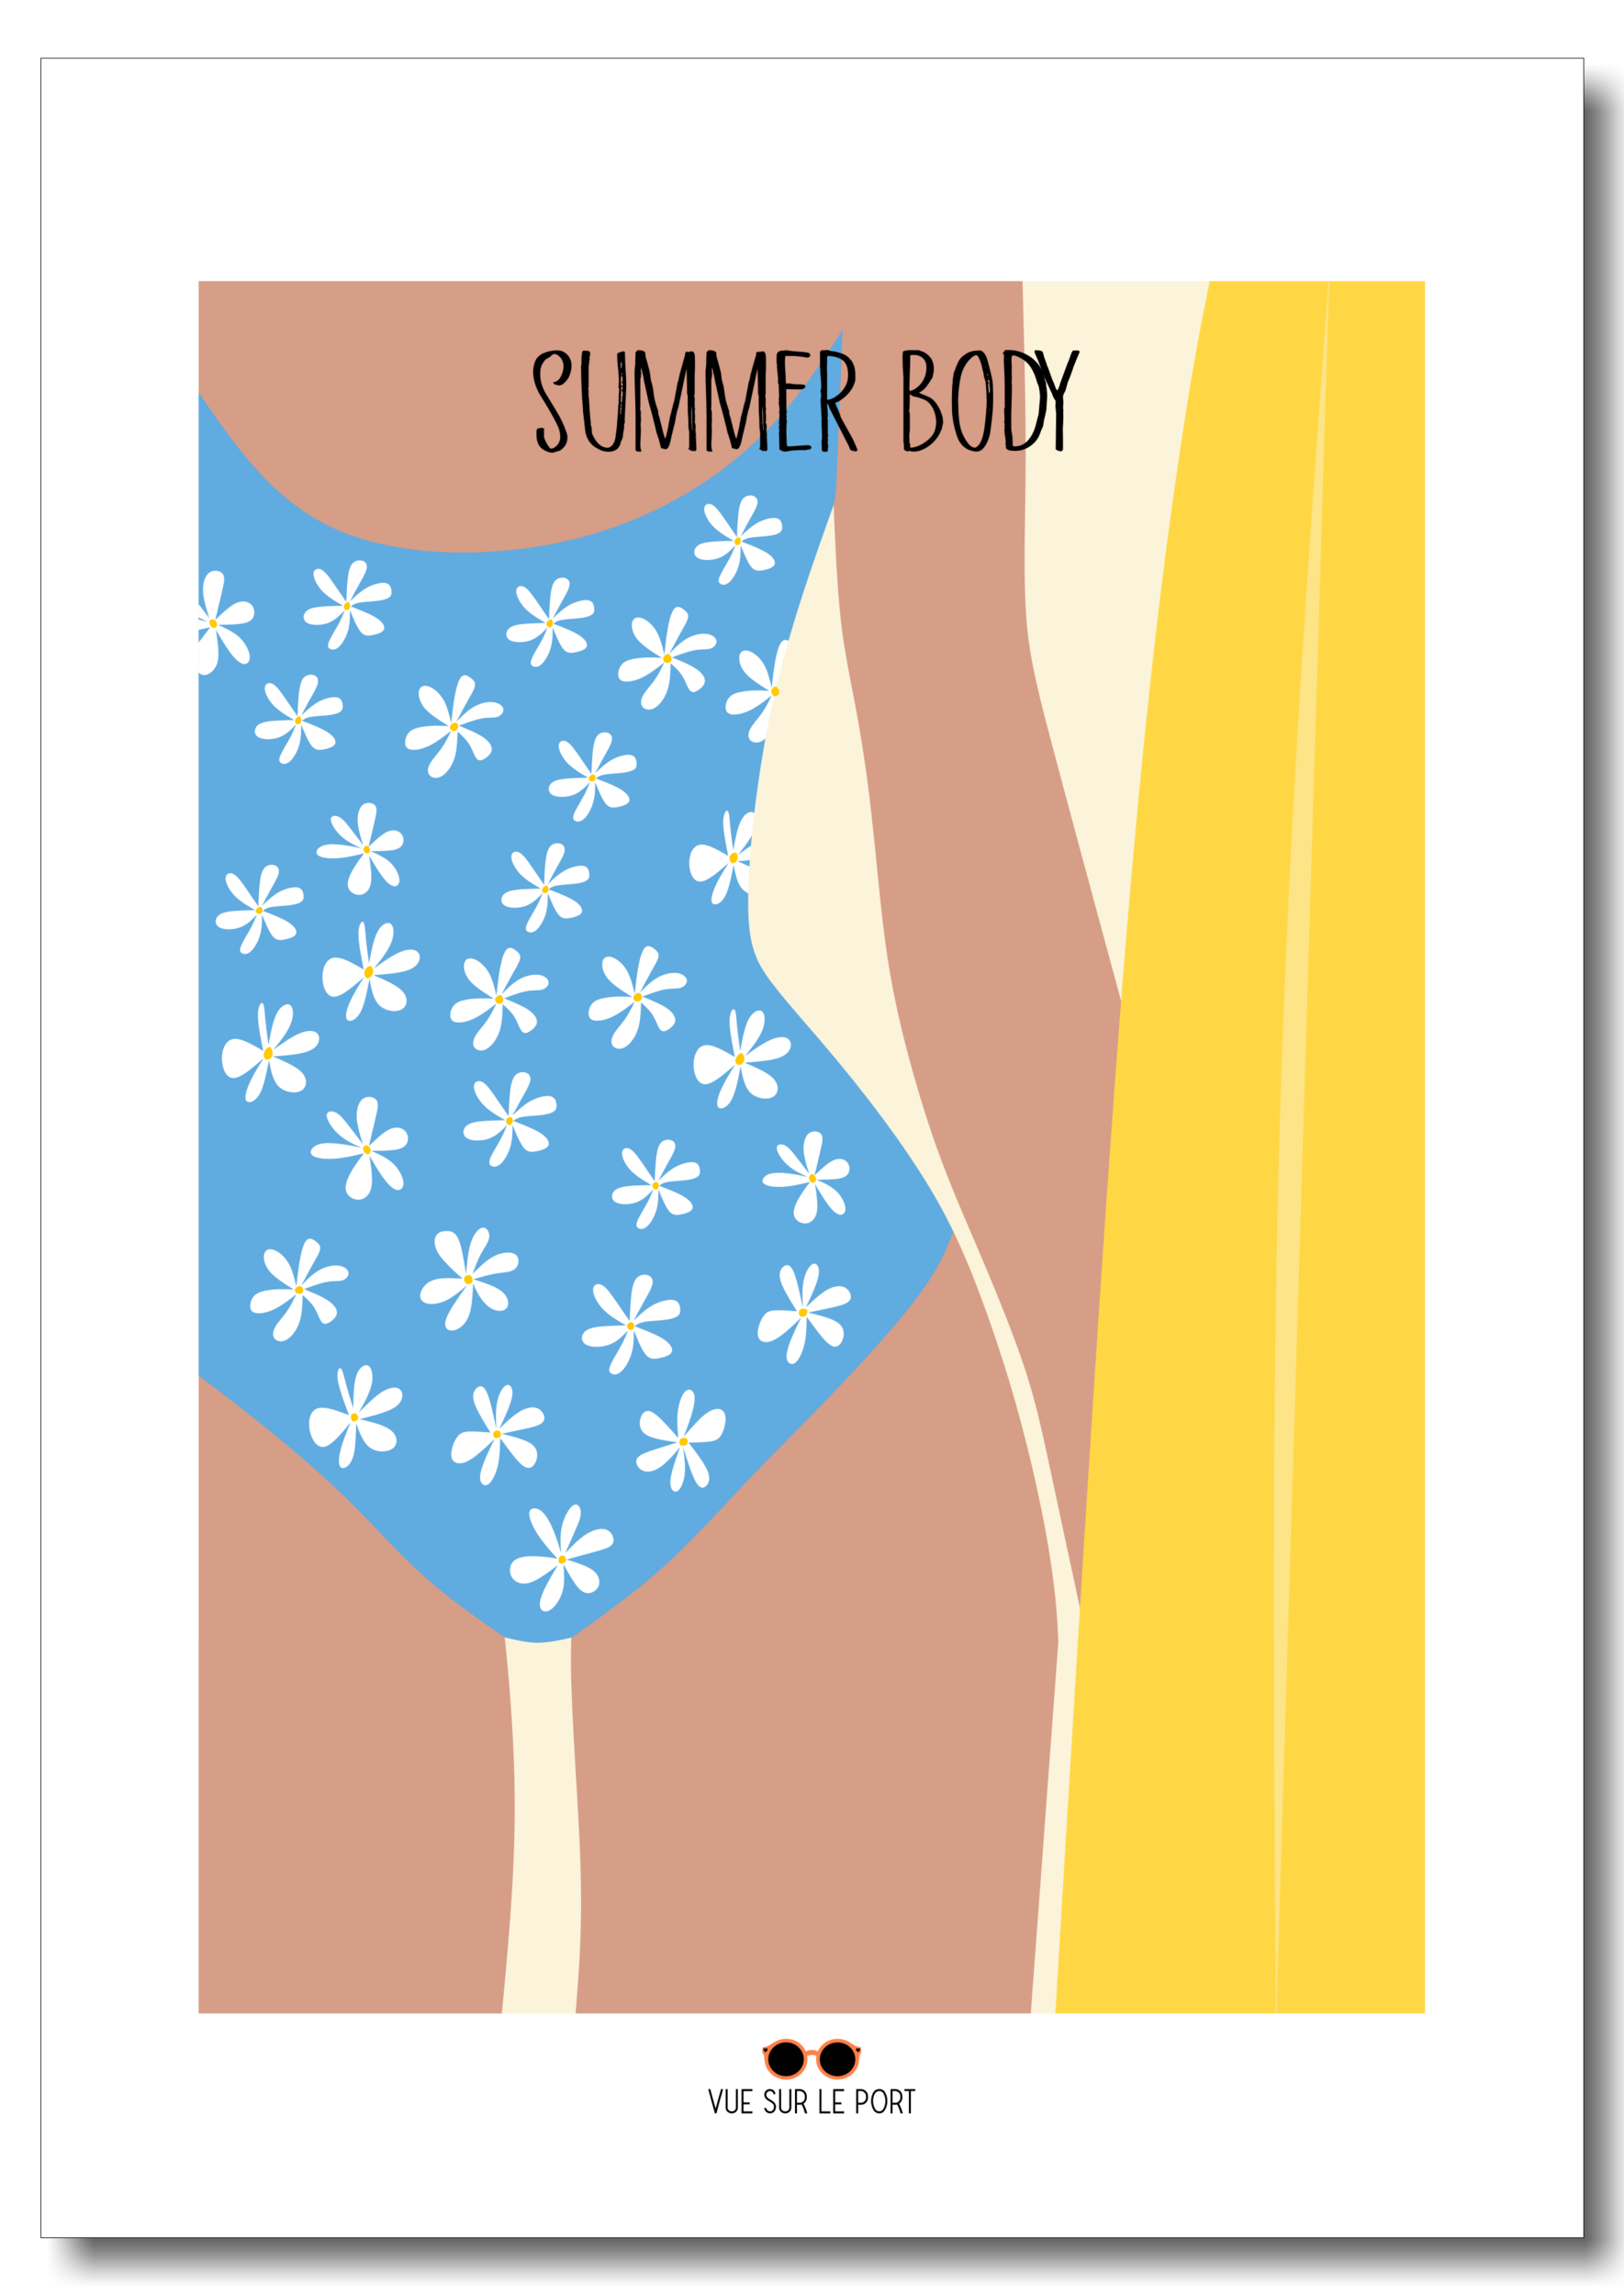 summer body etsy